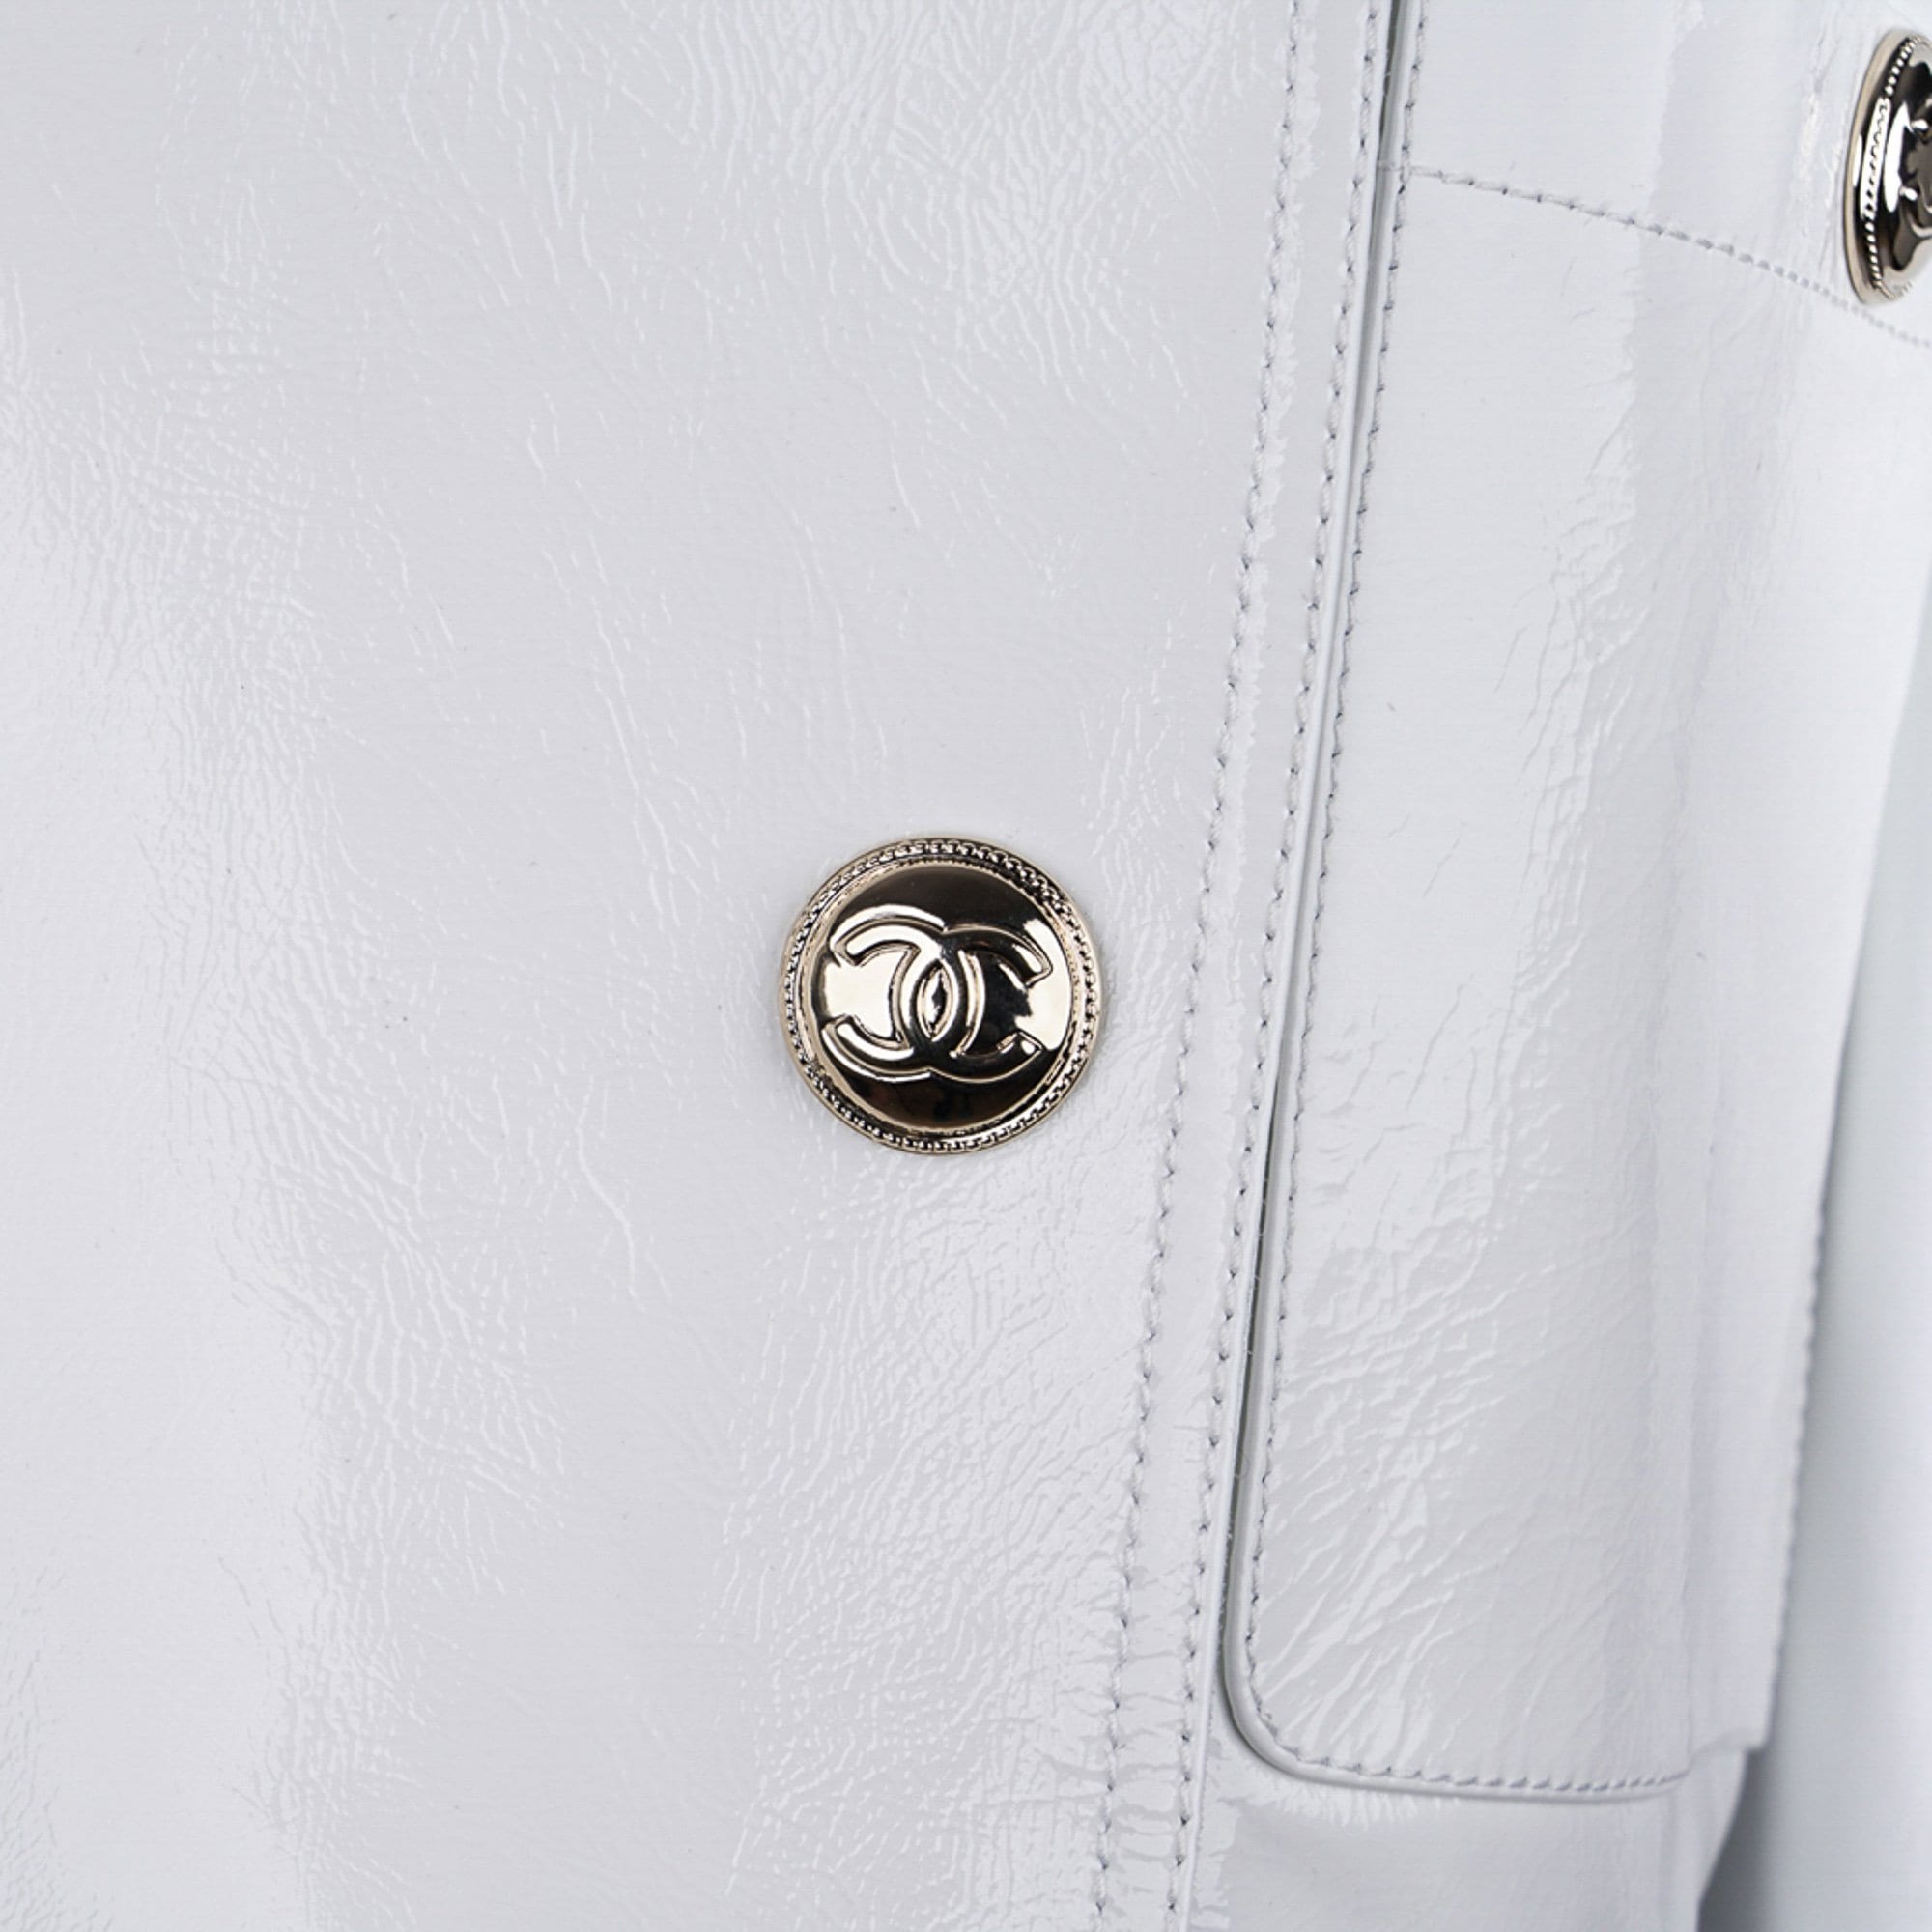 CHANEL CC Jacket Key Chain/ Bag Charm